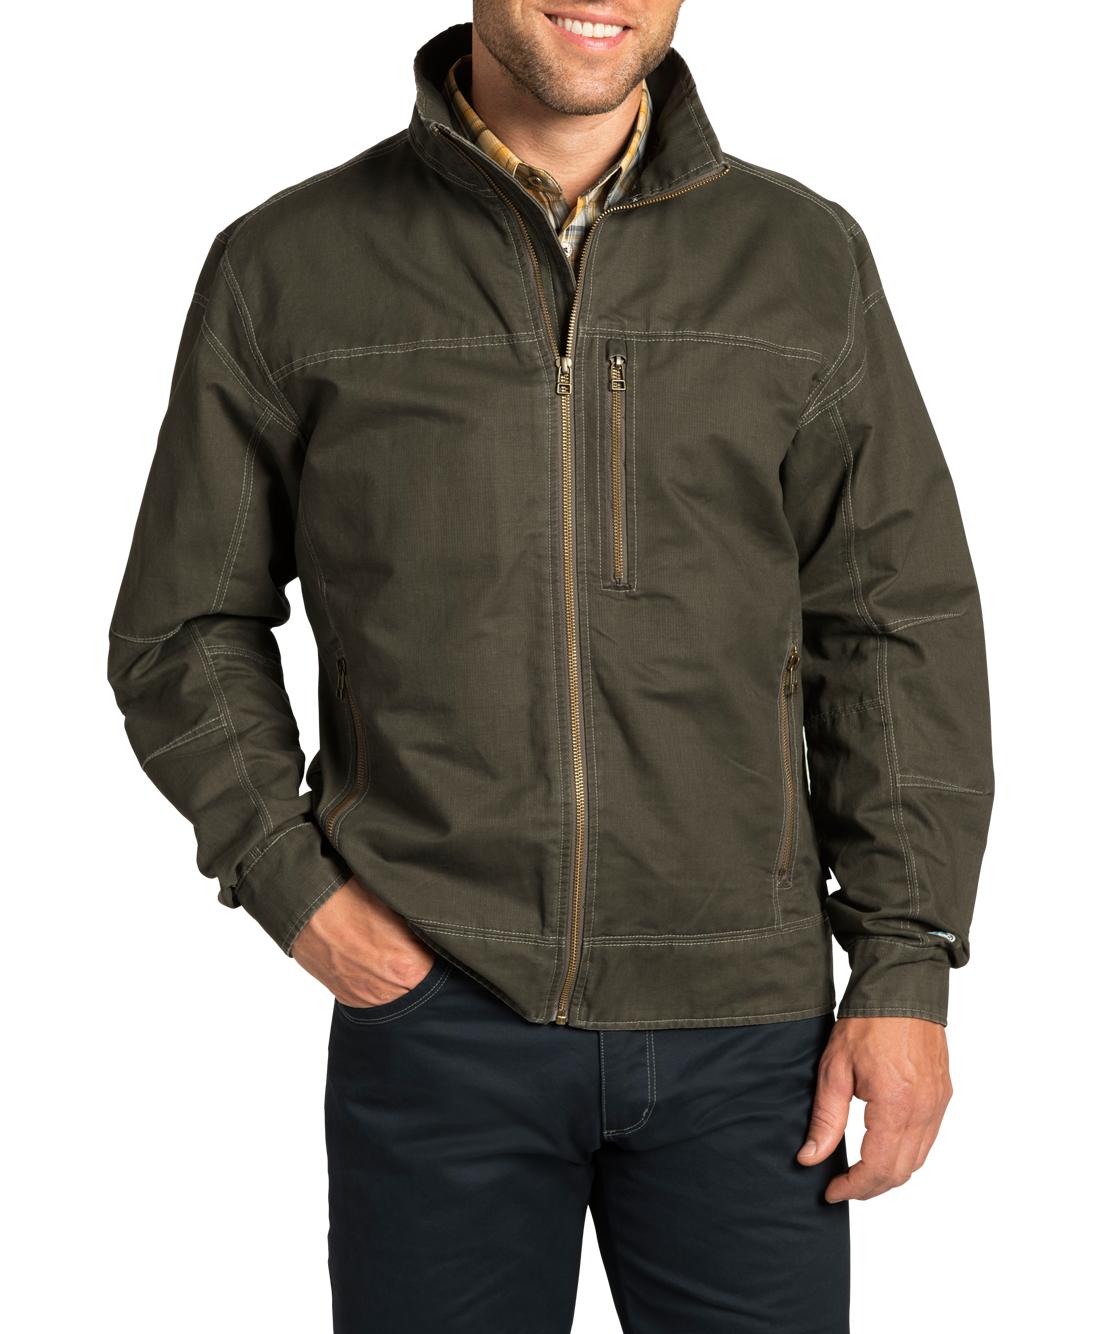 Vermont Gear - Farm-Way: Kuhl Men's Burr™ Jacket